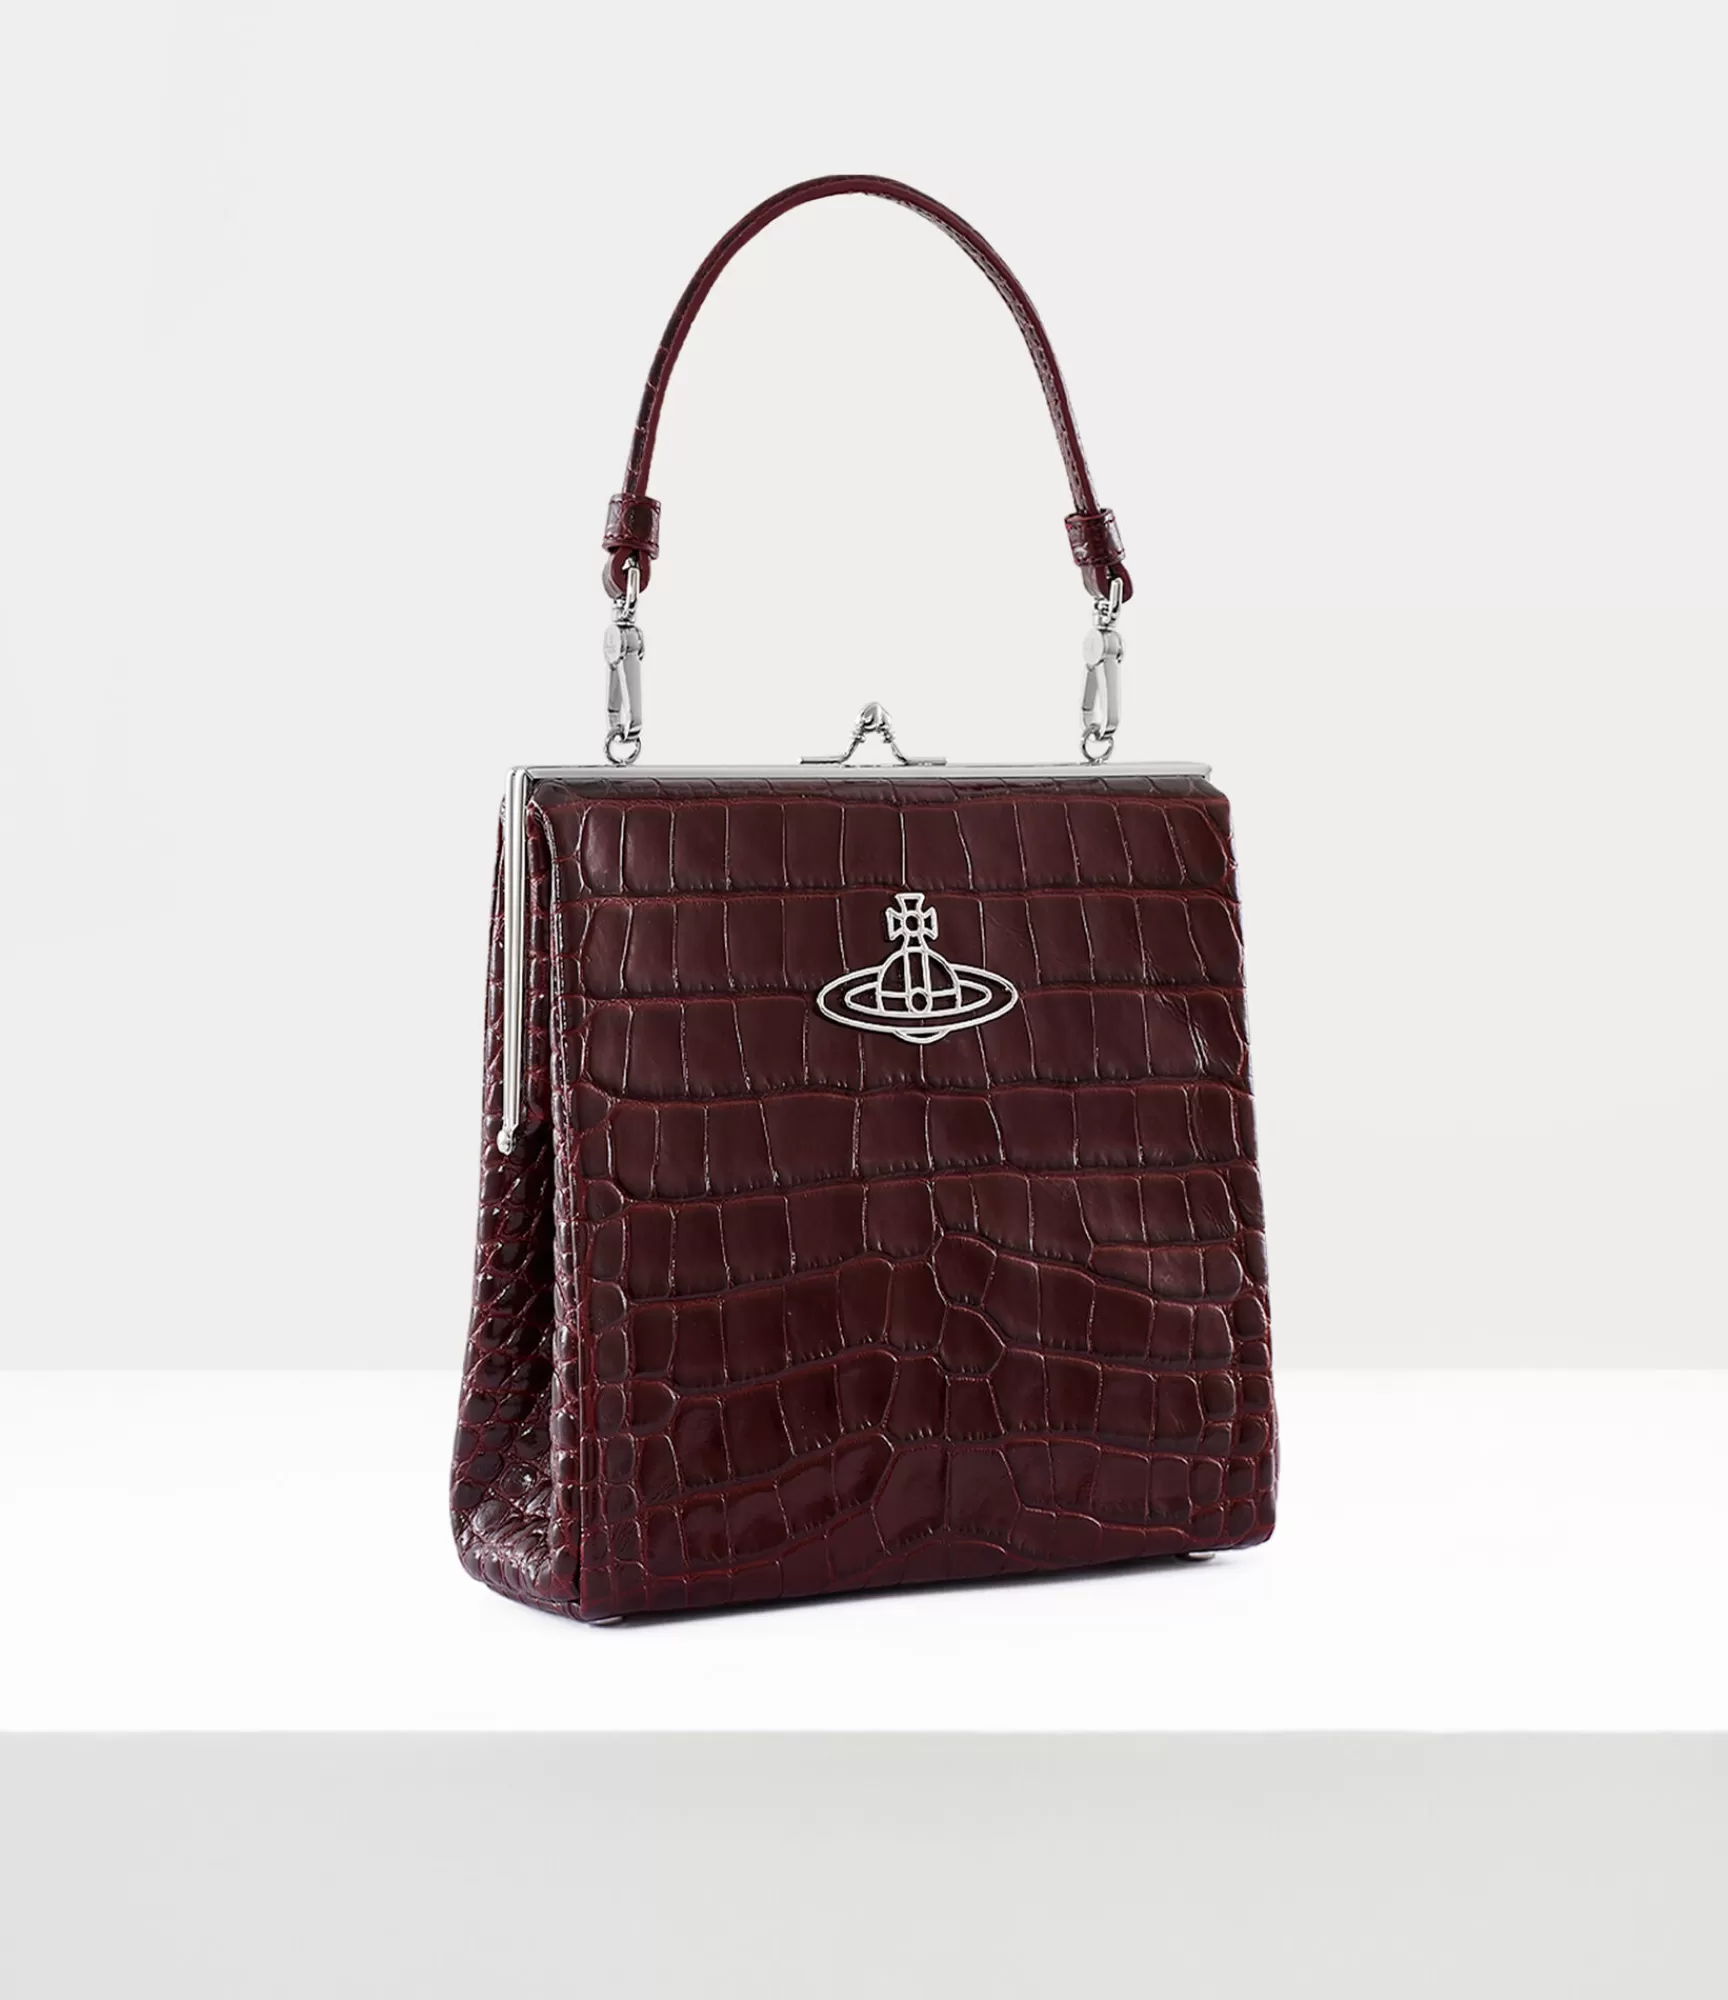 Vivienne Westwood Handbags*Square frame purse Burgundy